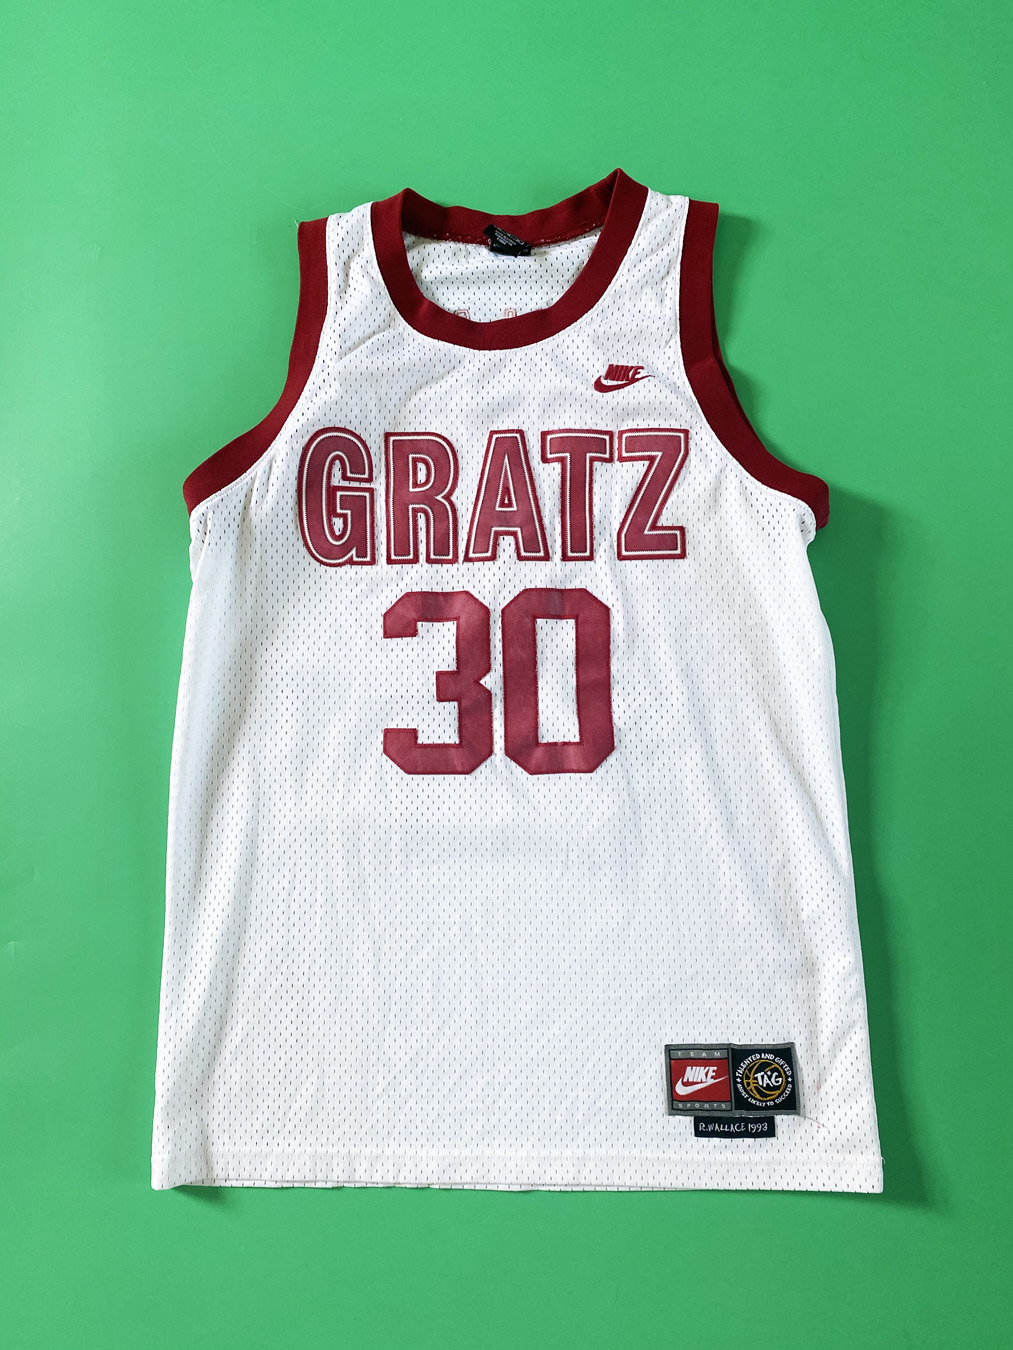 Rasheed Wallace GRATZ Highschool Nike Jersey - 5 Star Vintage